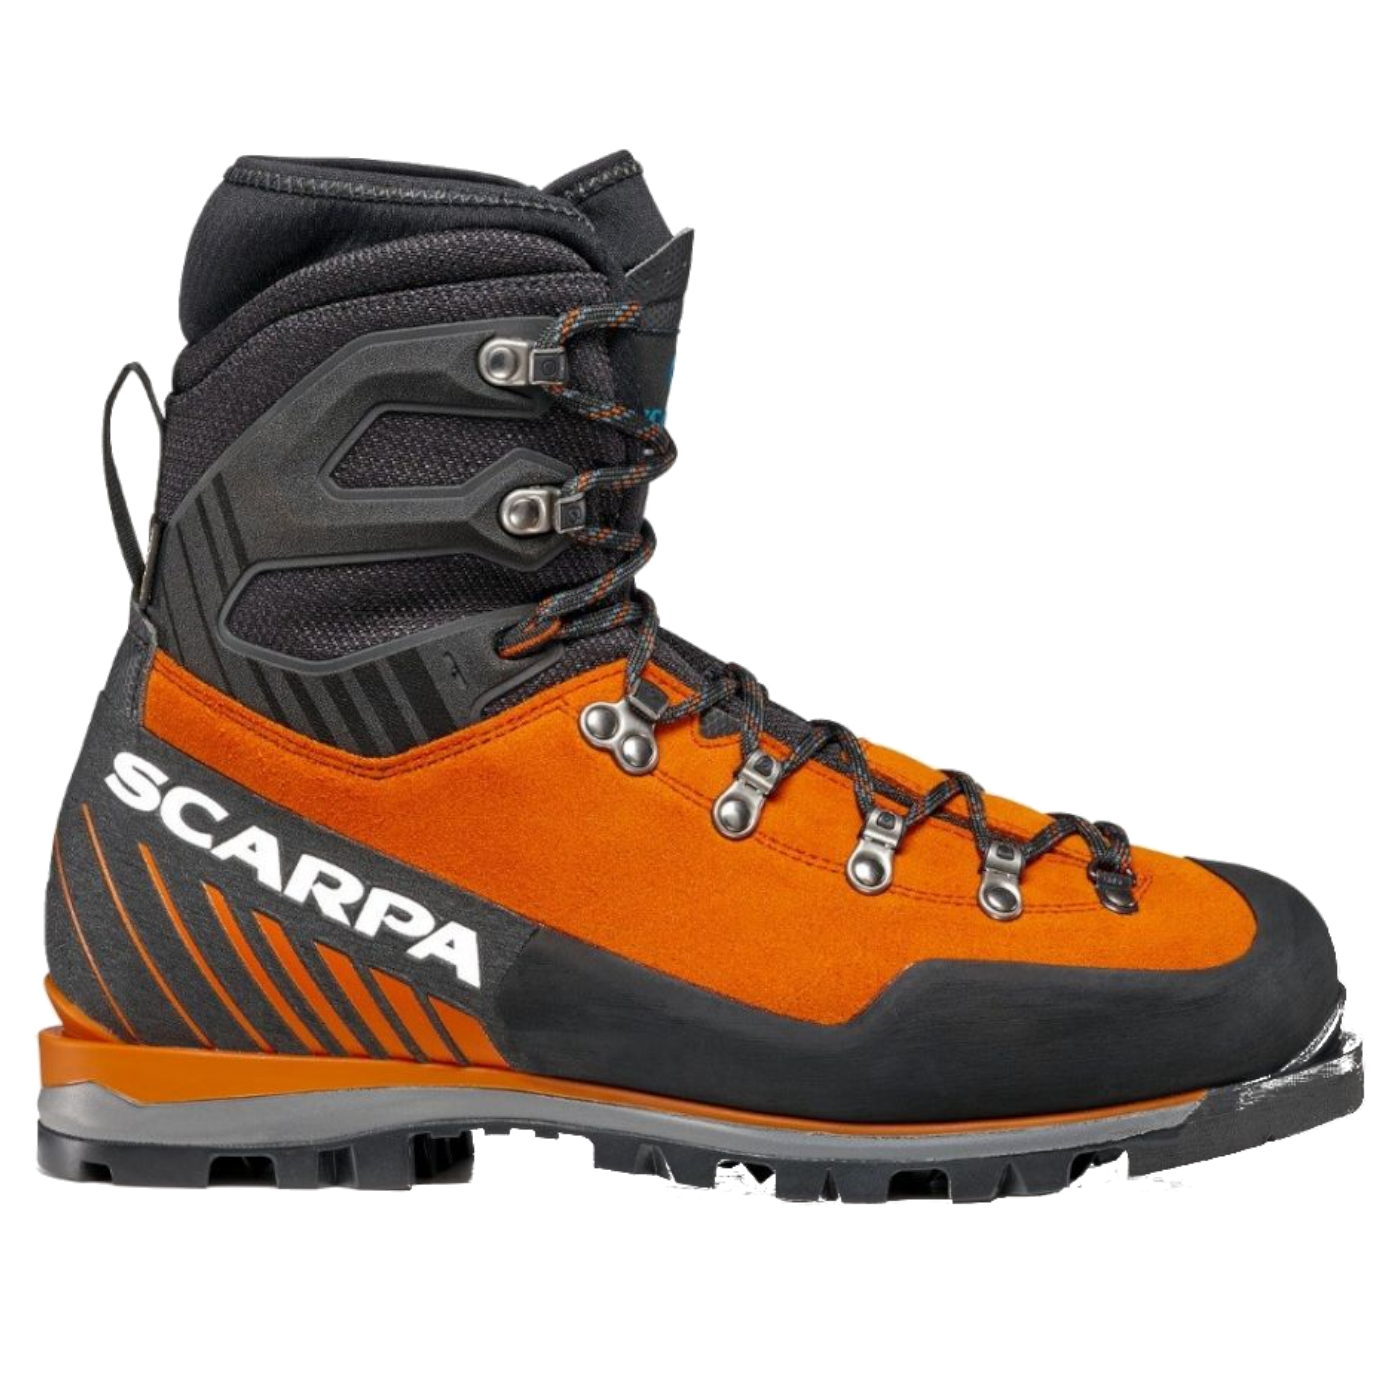 Scarpa Mont Blanc Pro GTX Size 45.5 Mountaineering Boot